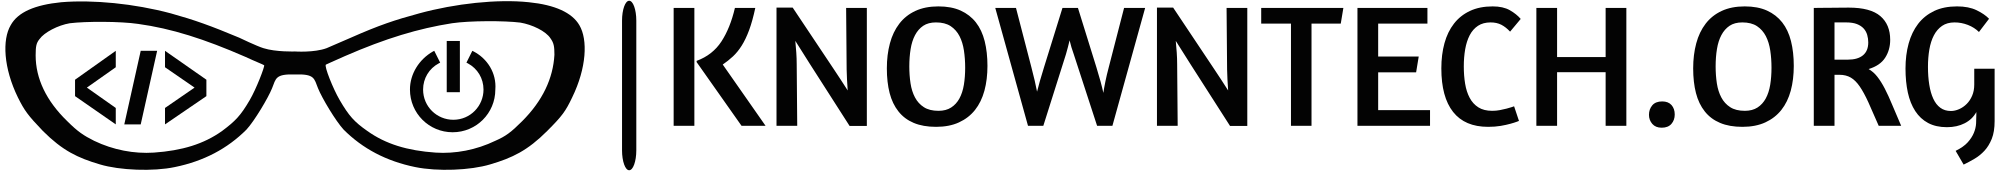 knowntechorg-logo